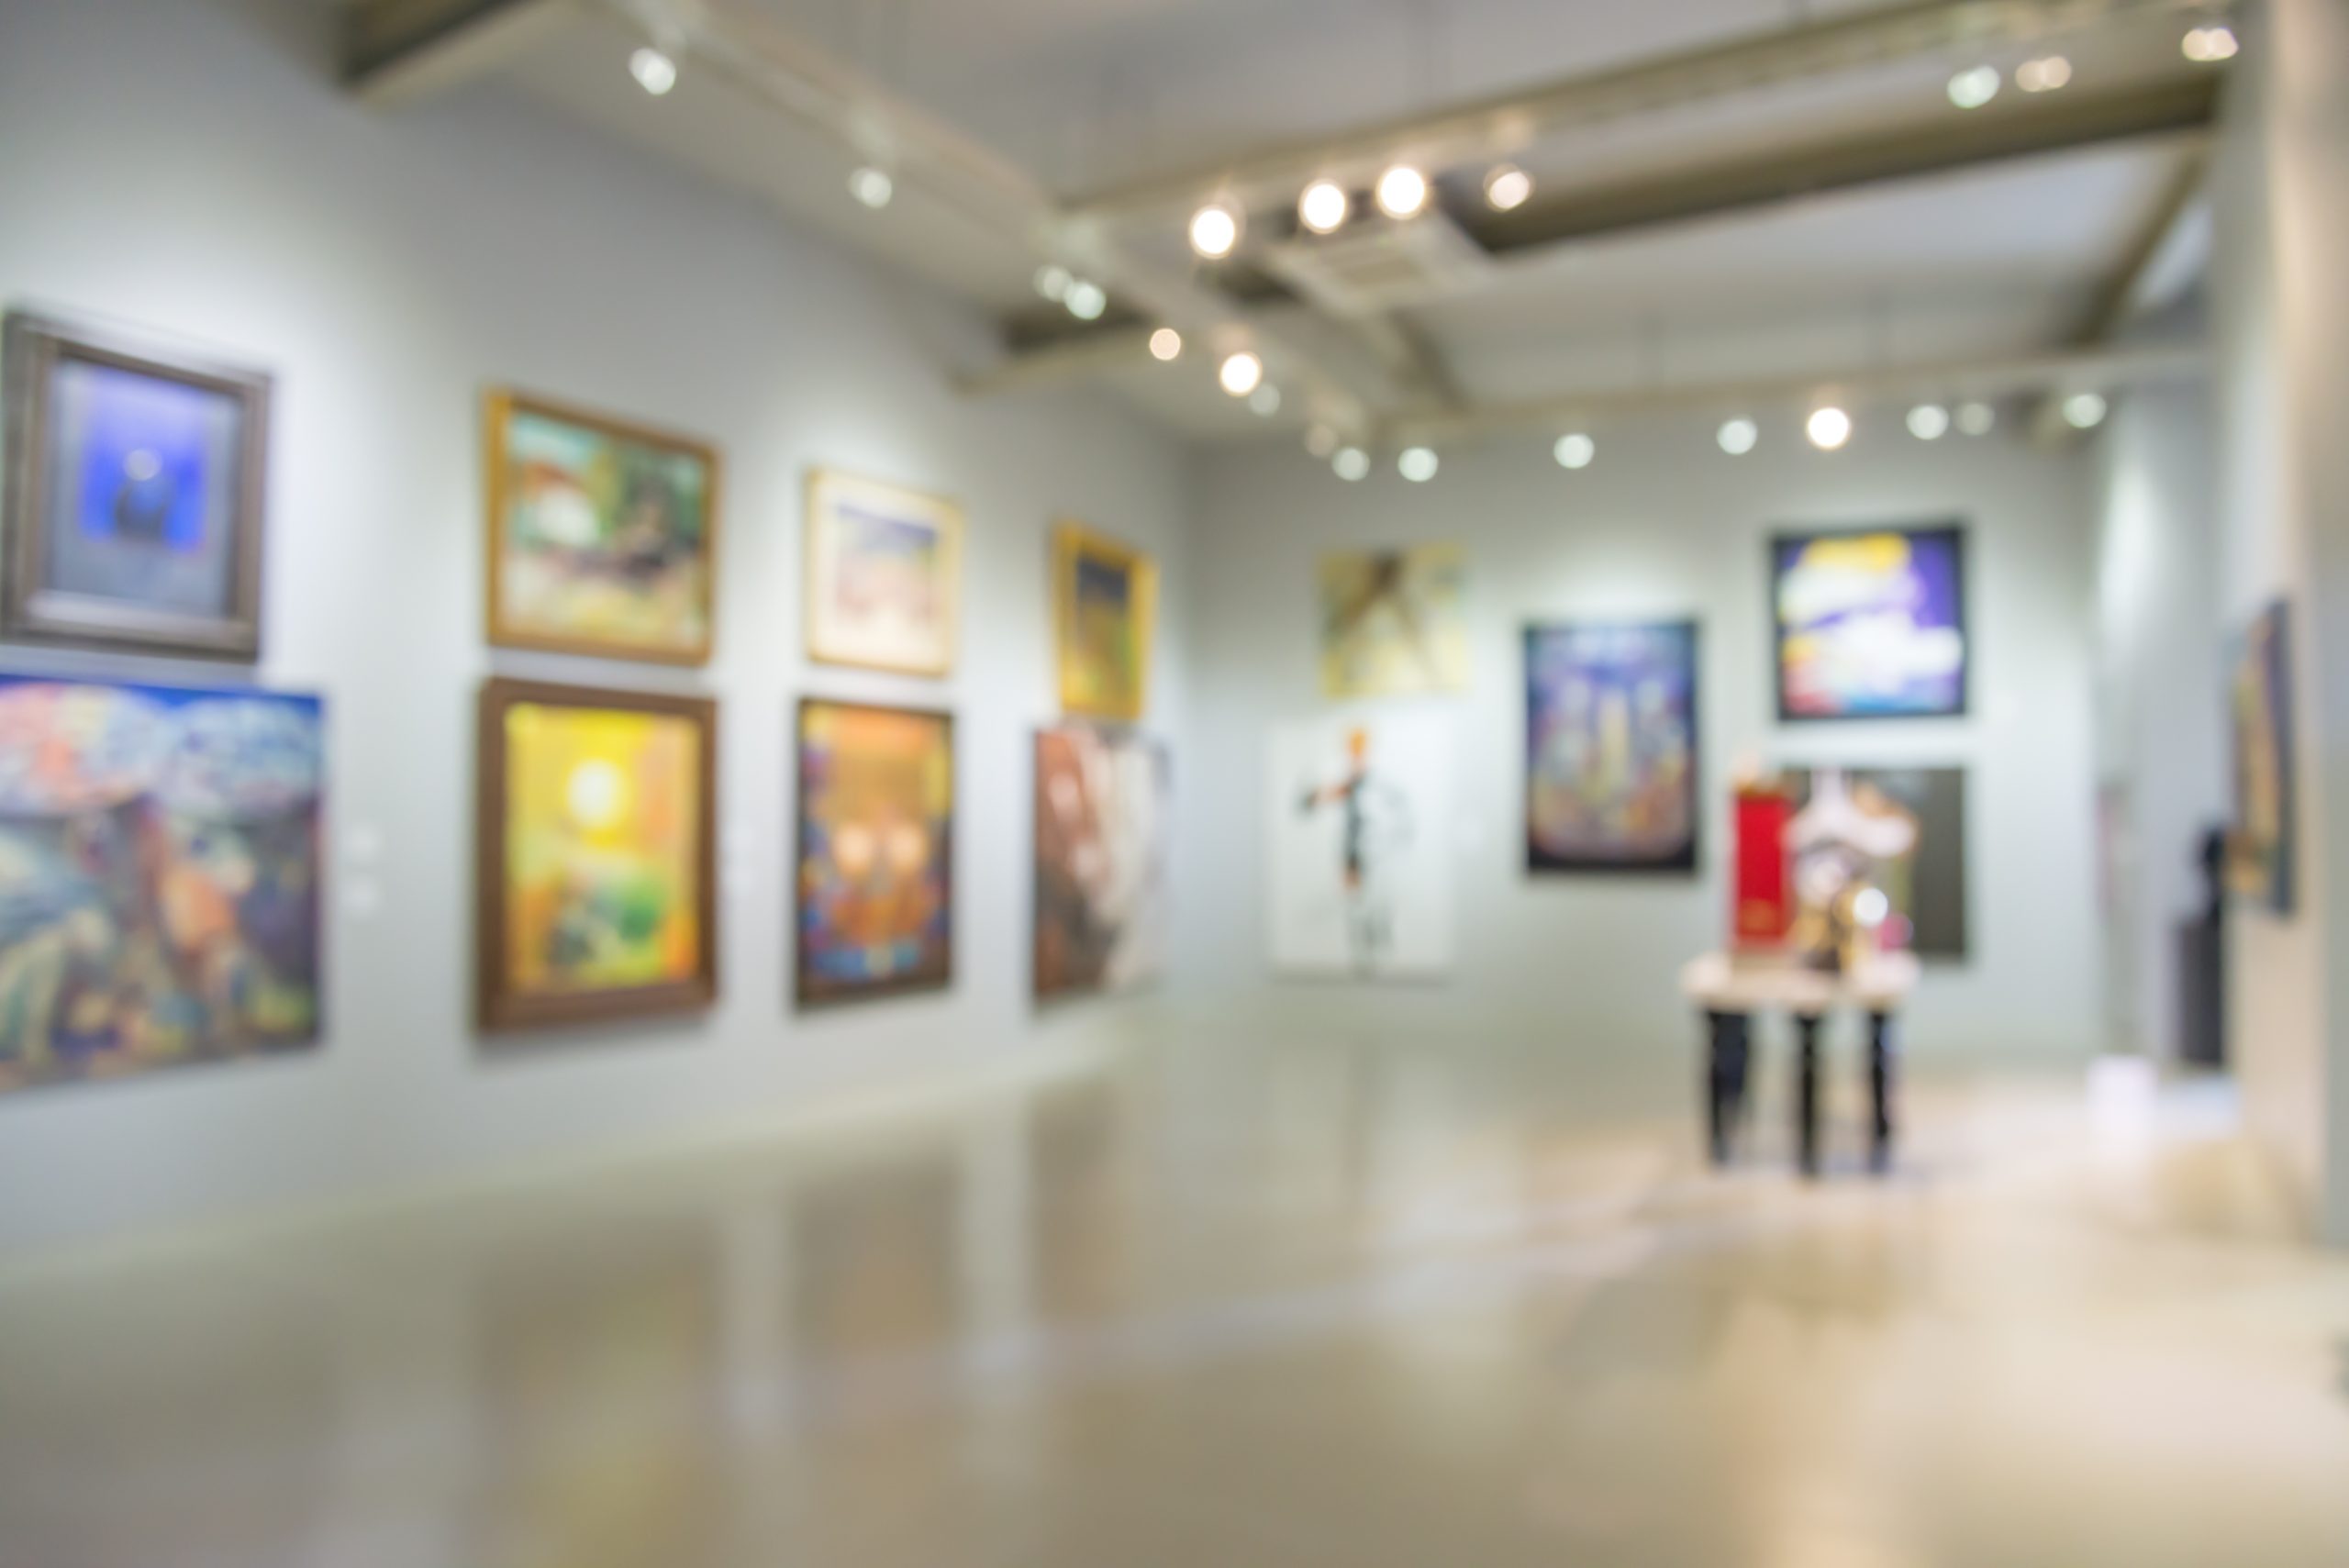 Abstract blur of an art gallery.